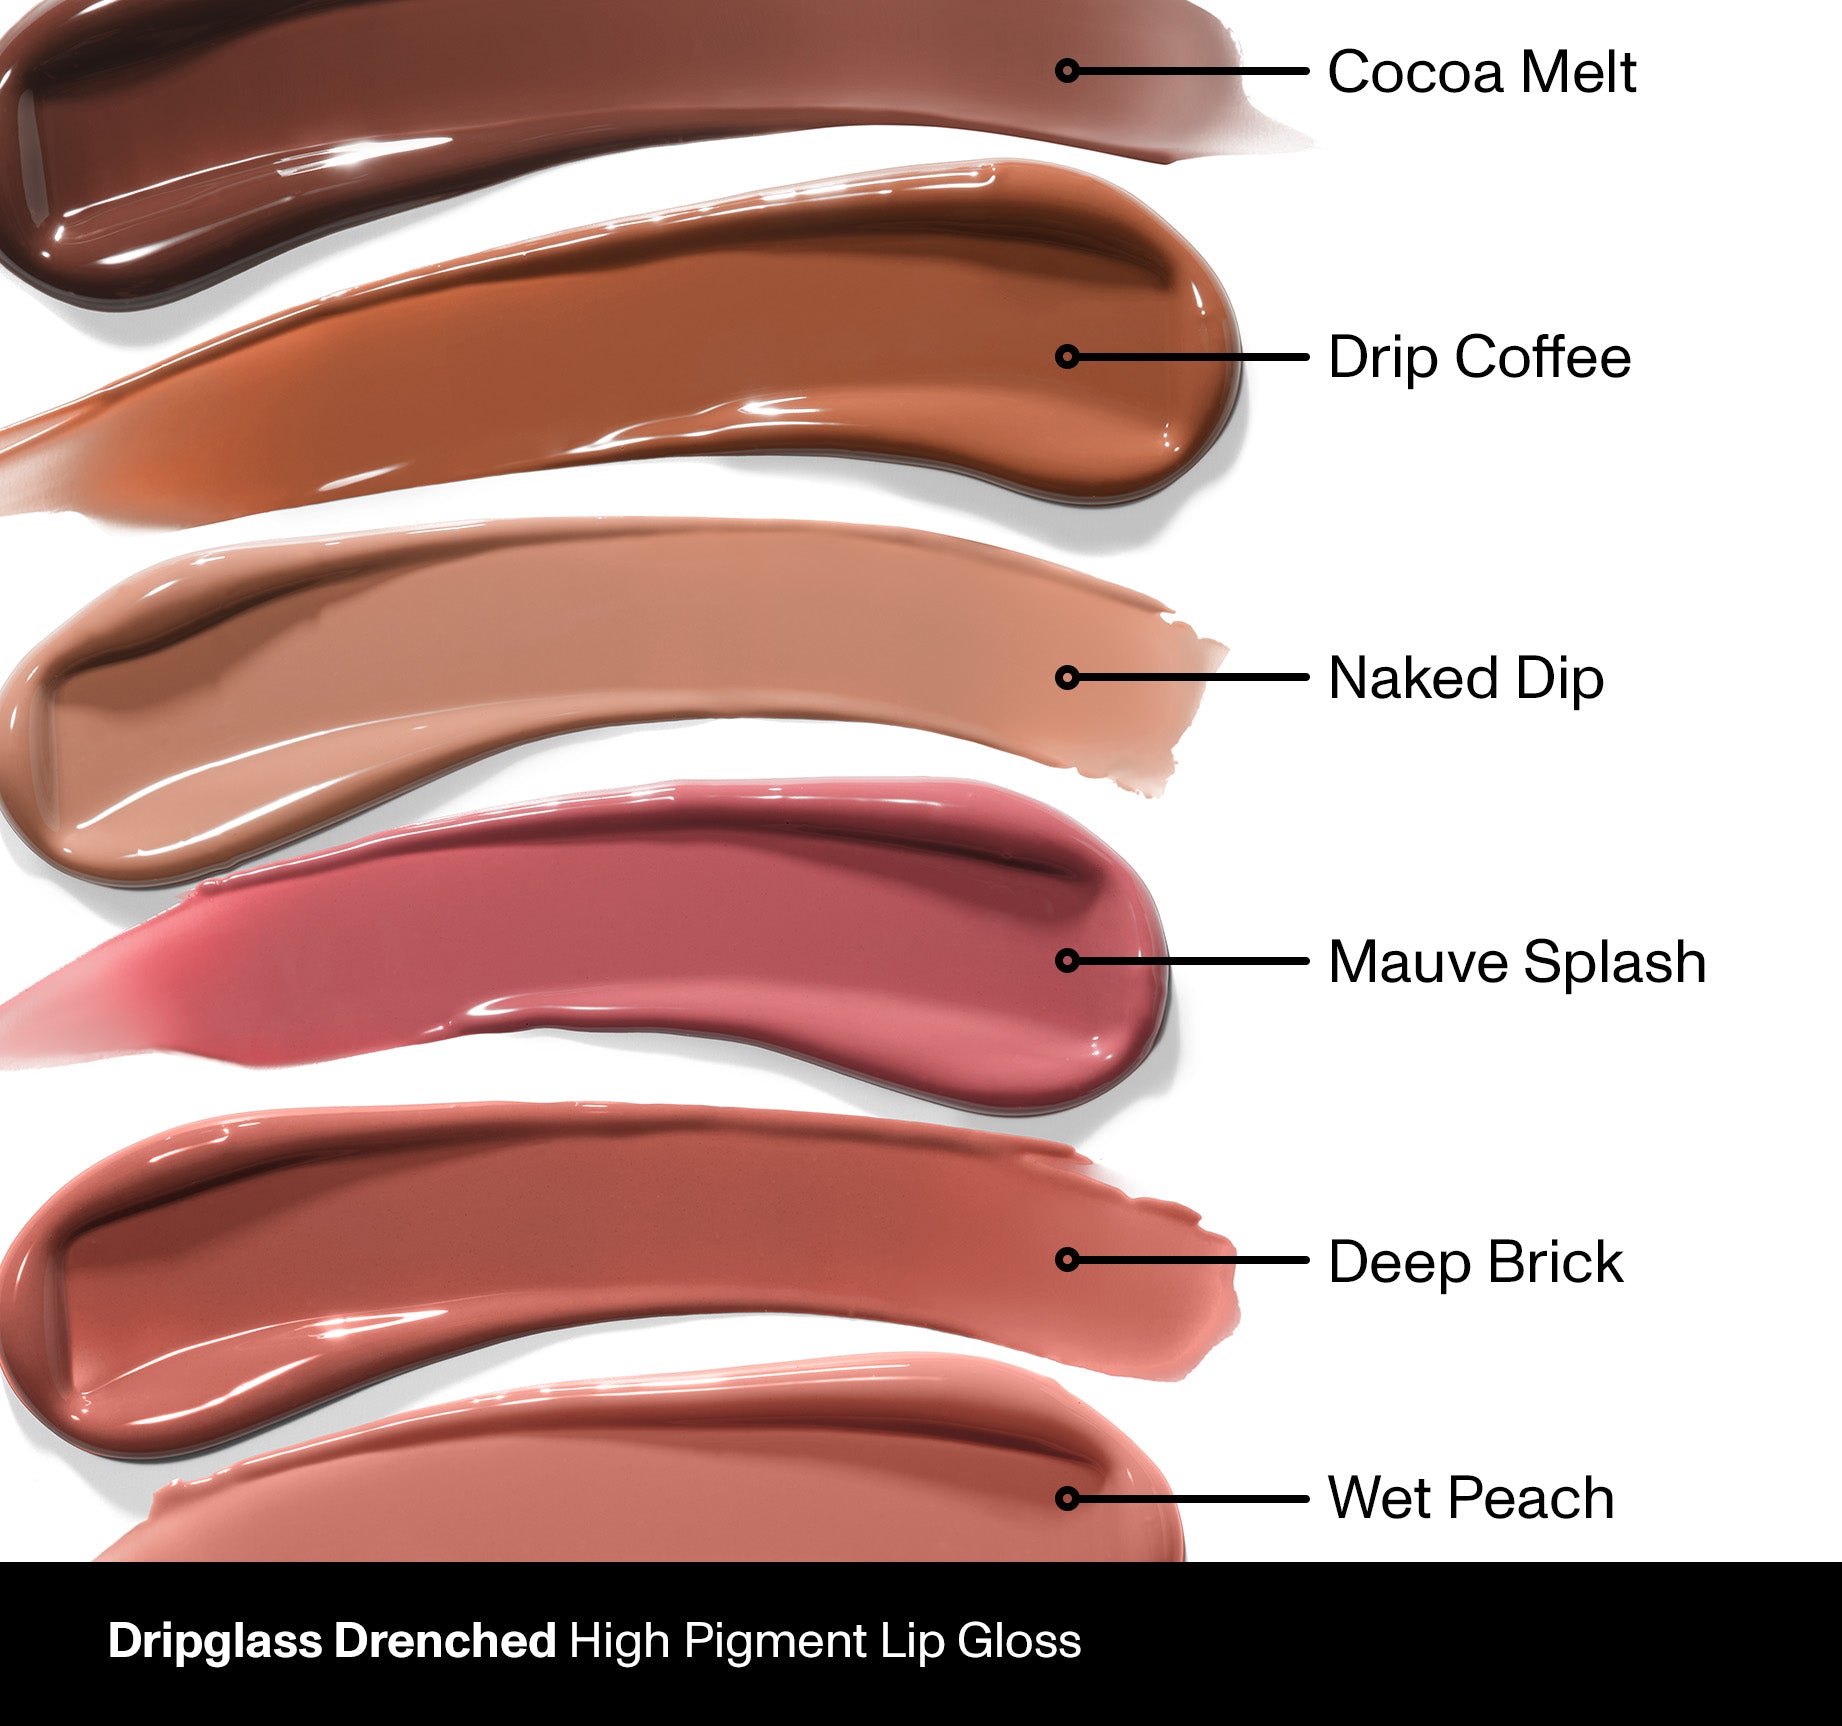 Dripglass Drenched High Pigment Lip Gloss - Mauve Splash - Image 6